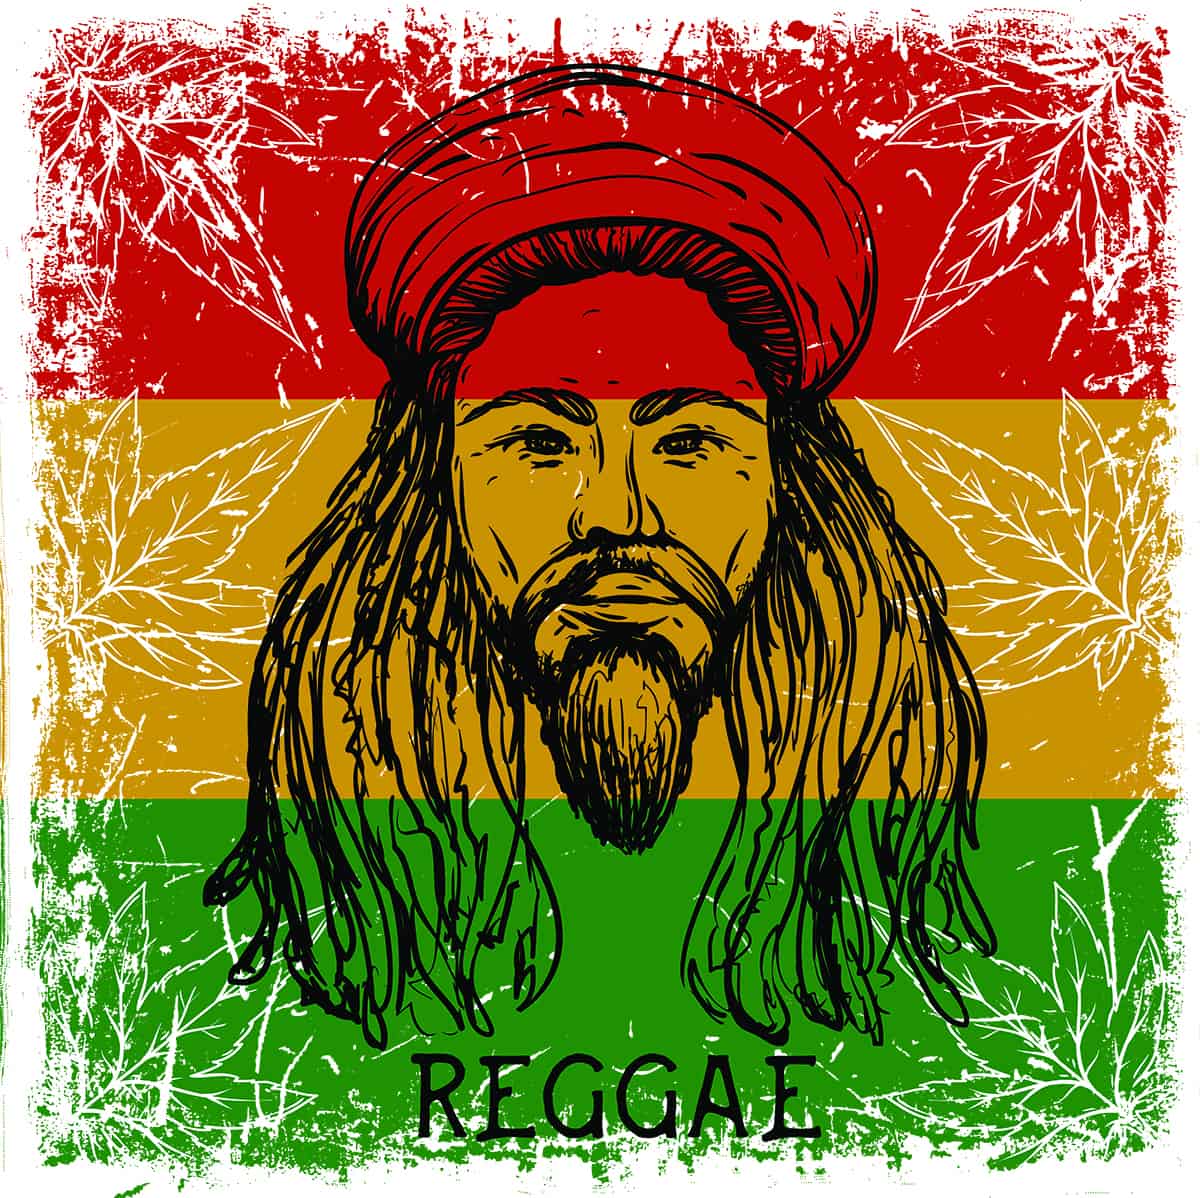 Showcase the Reggae Artwork